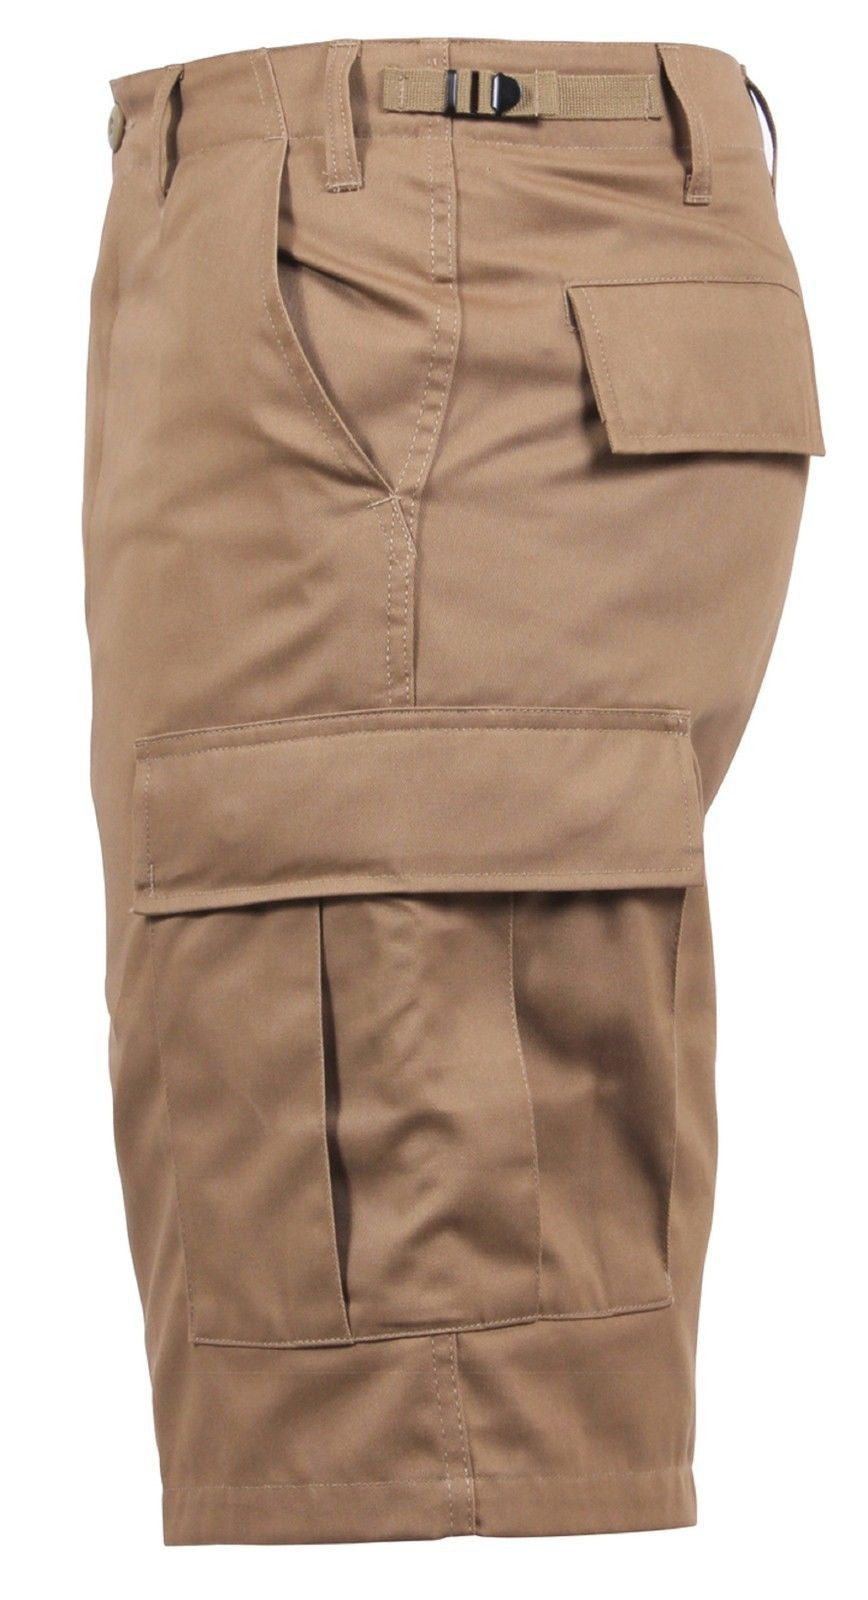 Men's Coyote Brown BDU Cargo Shorts - 6 Pocket Casual GI Style Shorts